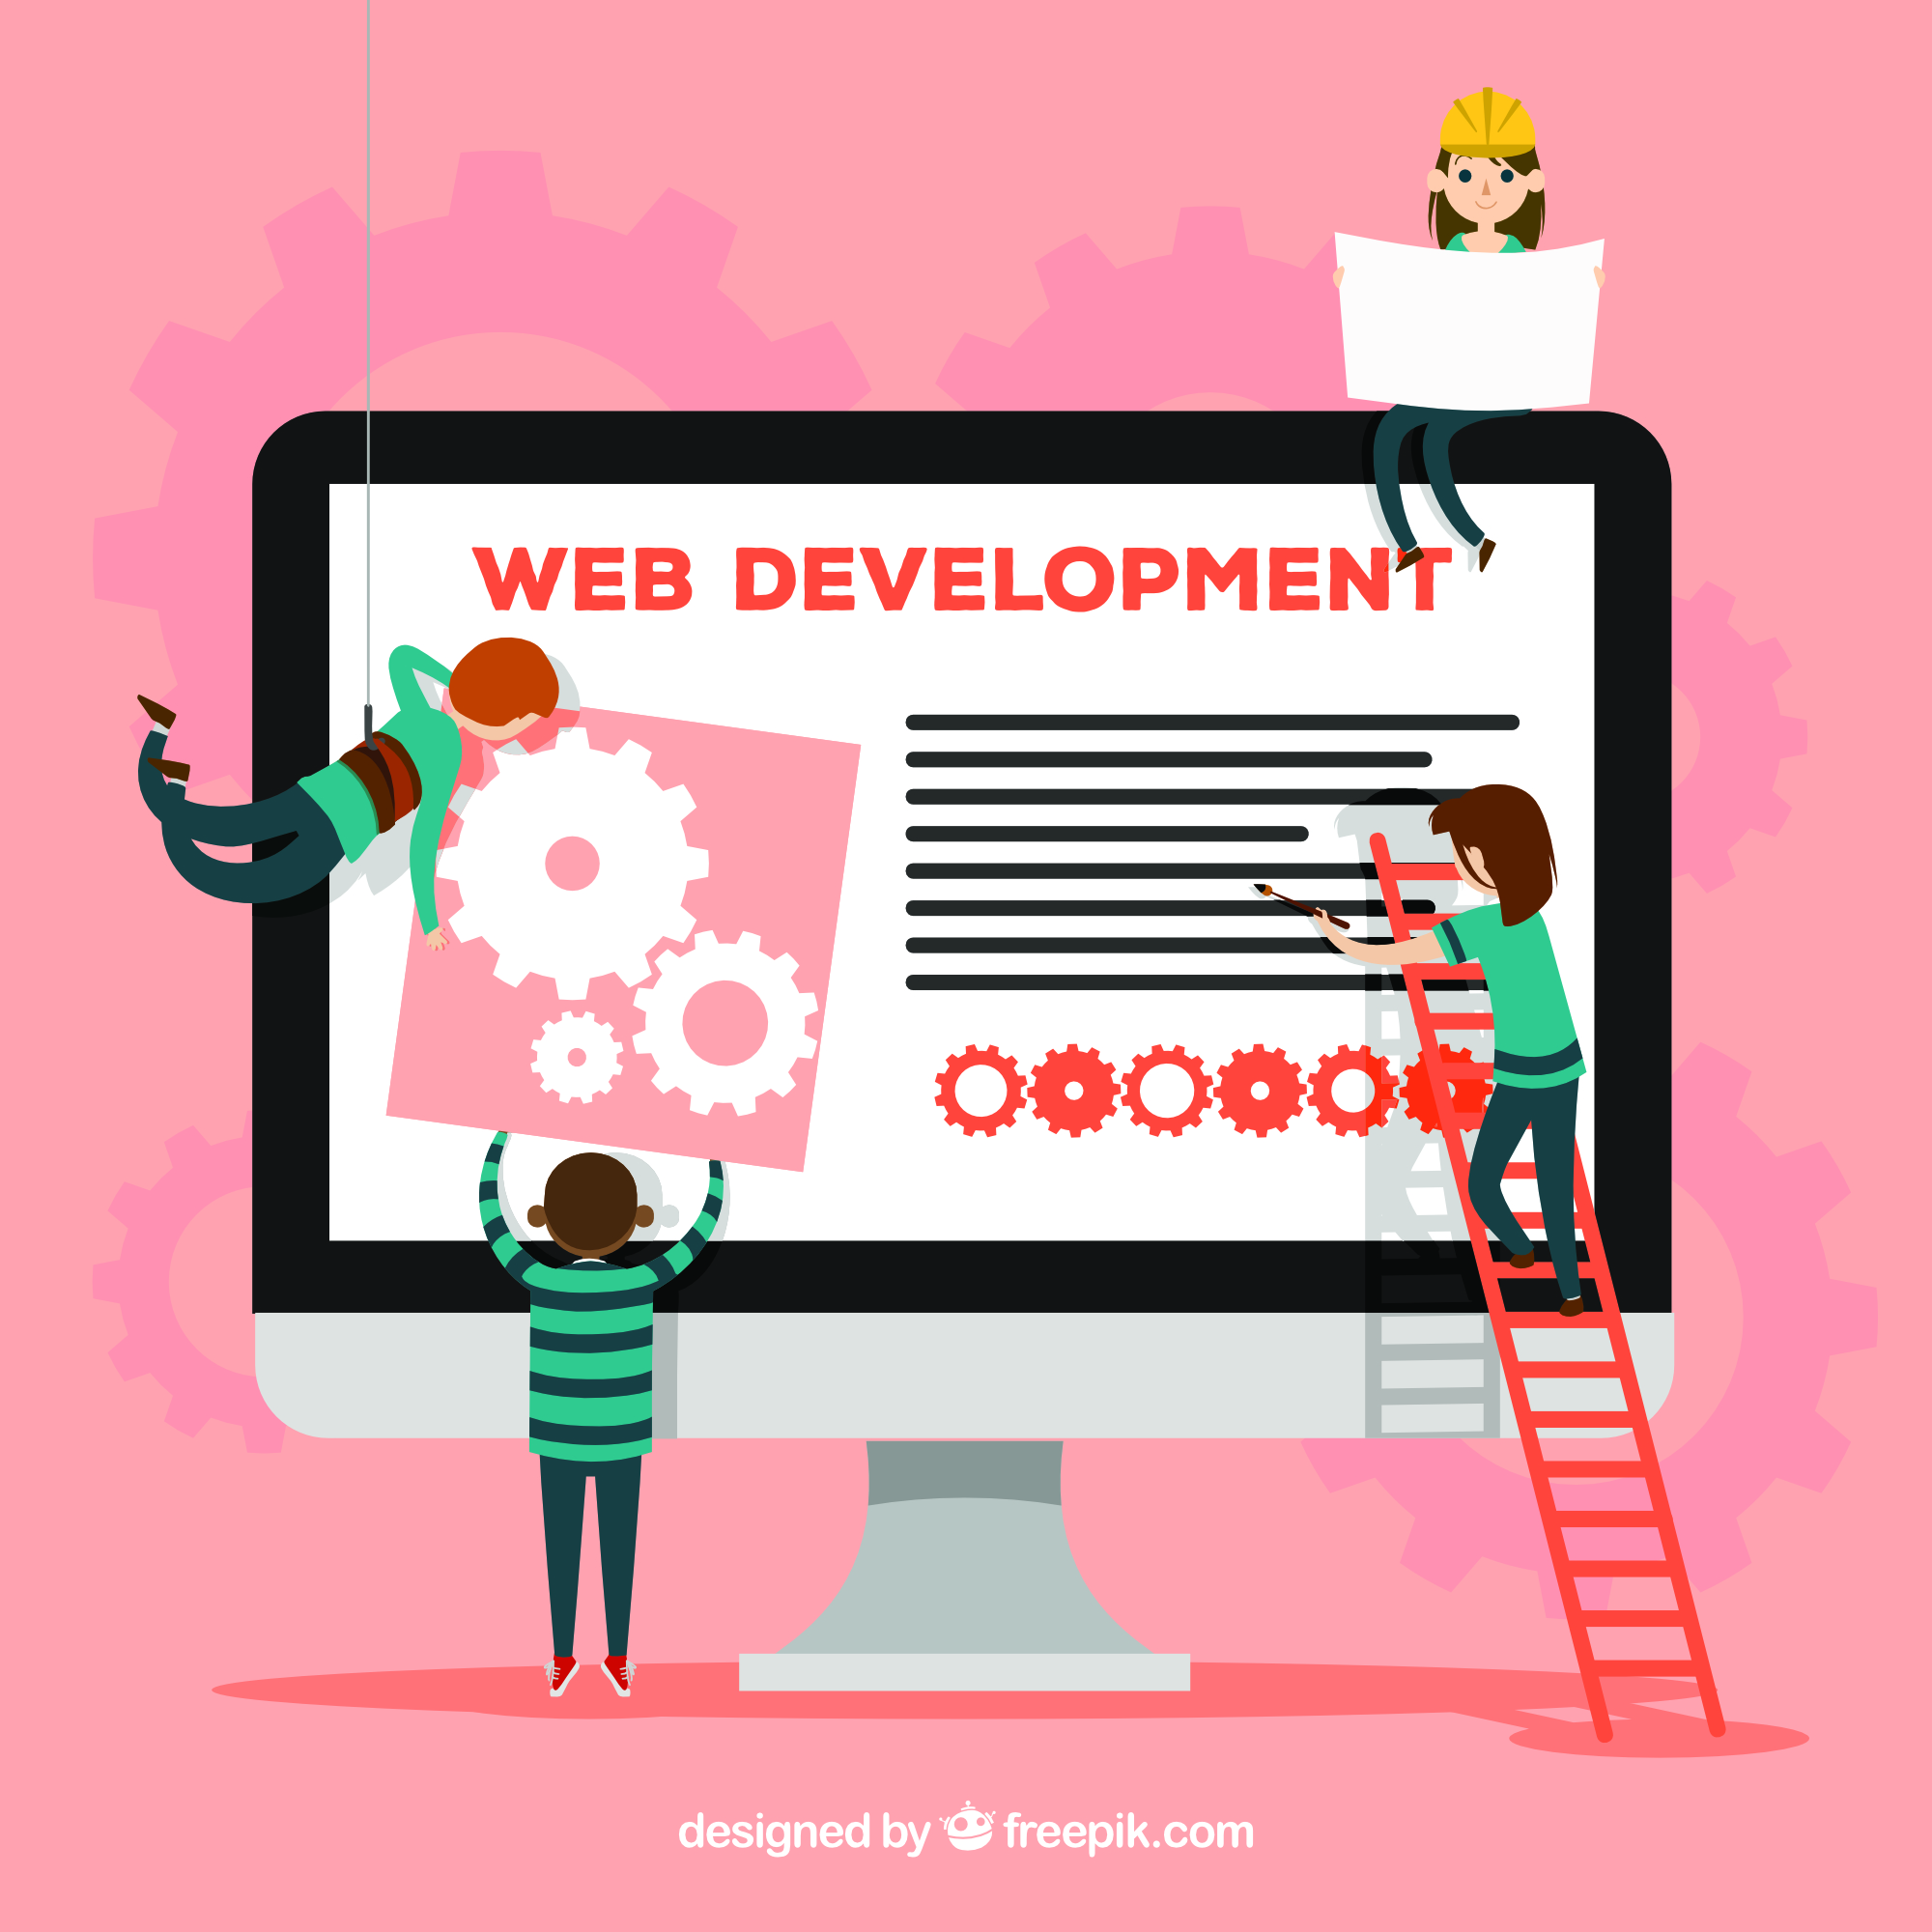 What is a web development company